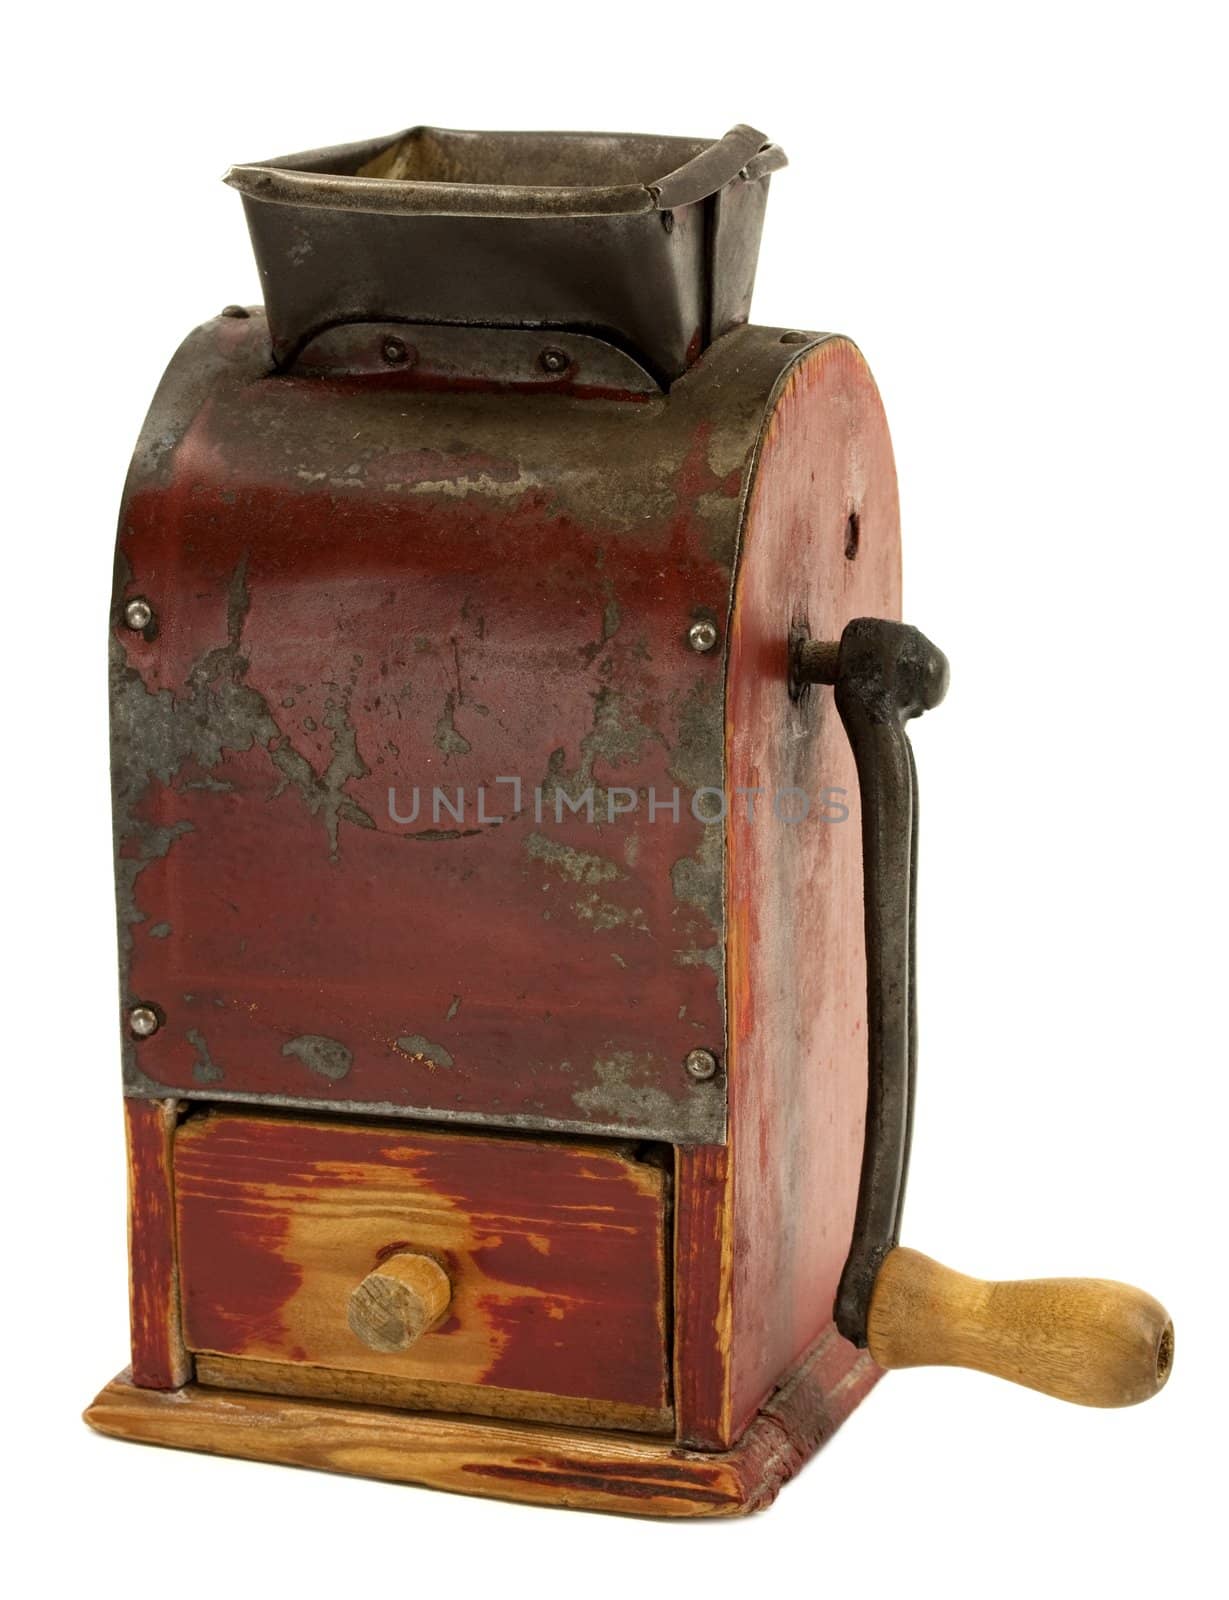 Vintage grunge manual coffee grinder on white